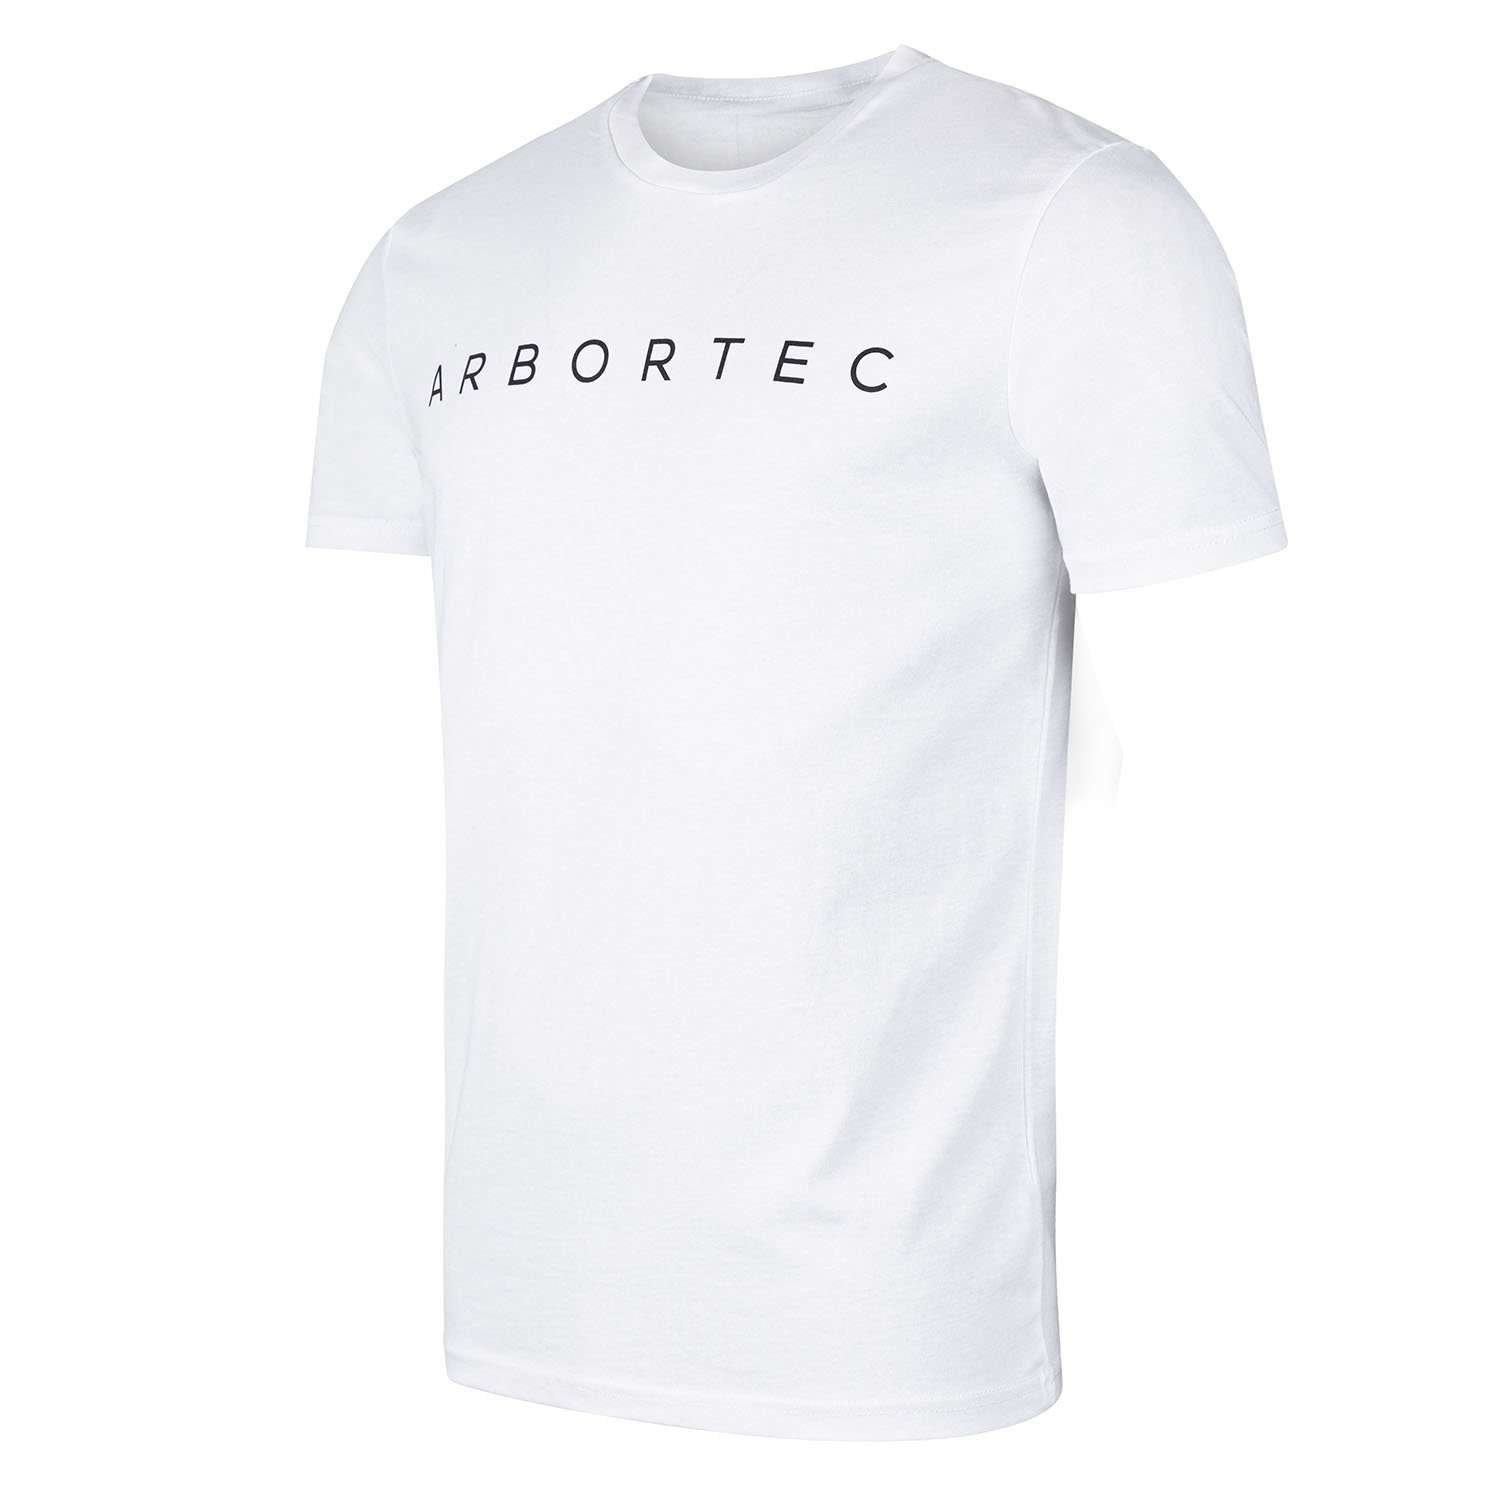 AT5006 T-Shirt Arbortec Branded White